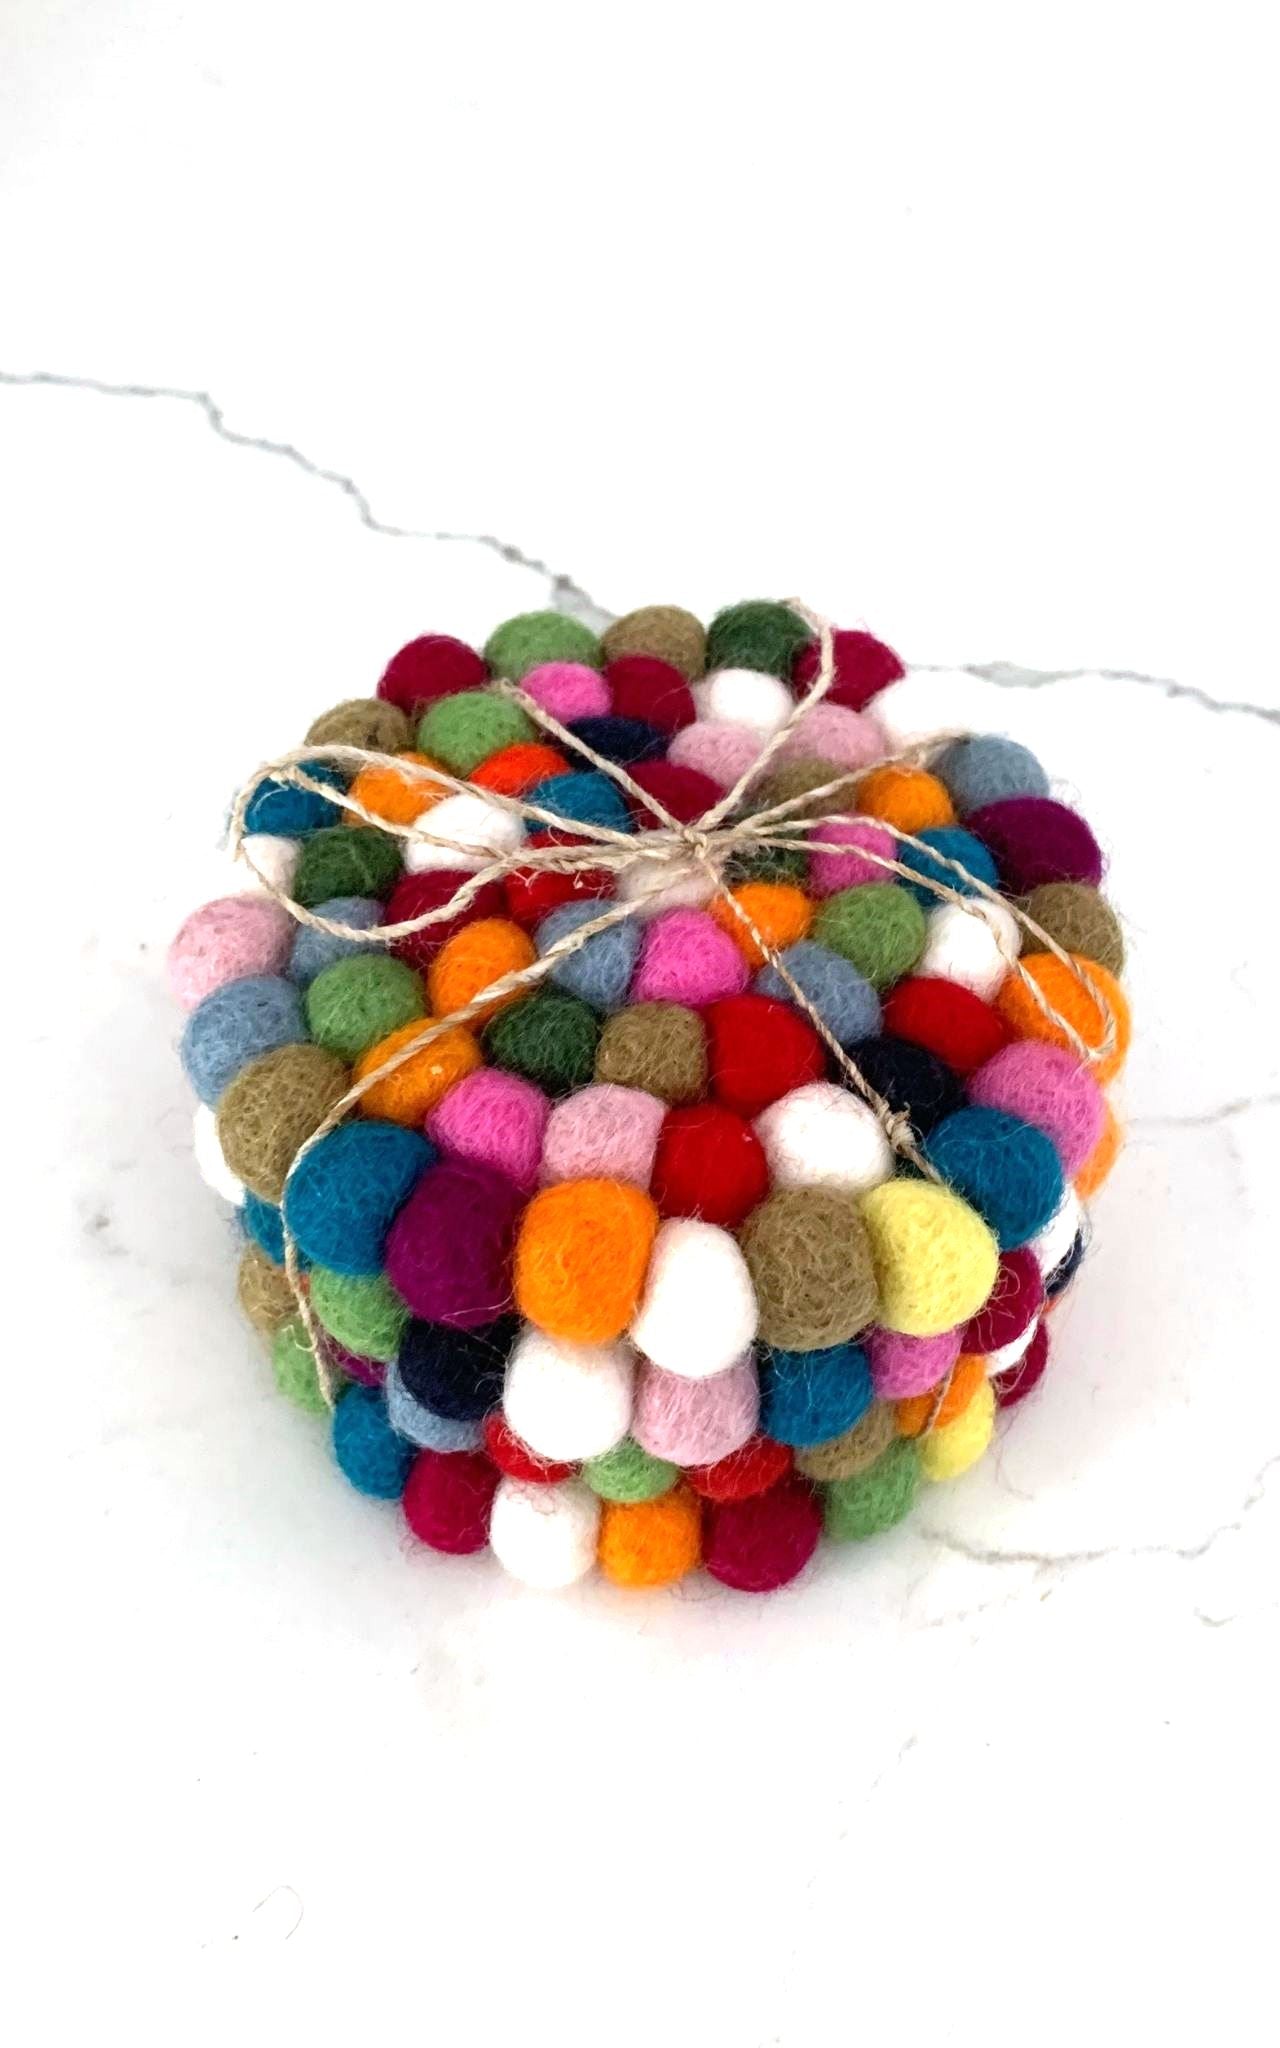 Surya Australia Fairtrade Felt Ball Coasters from Nepal - Multicolour 4 Pack | Round